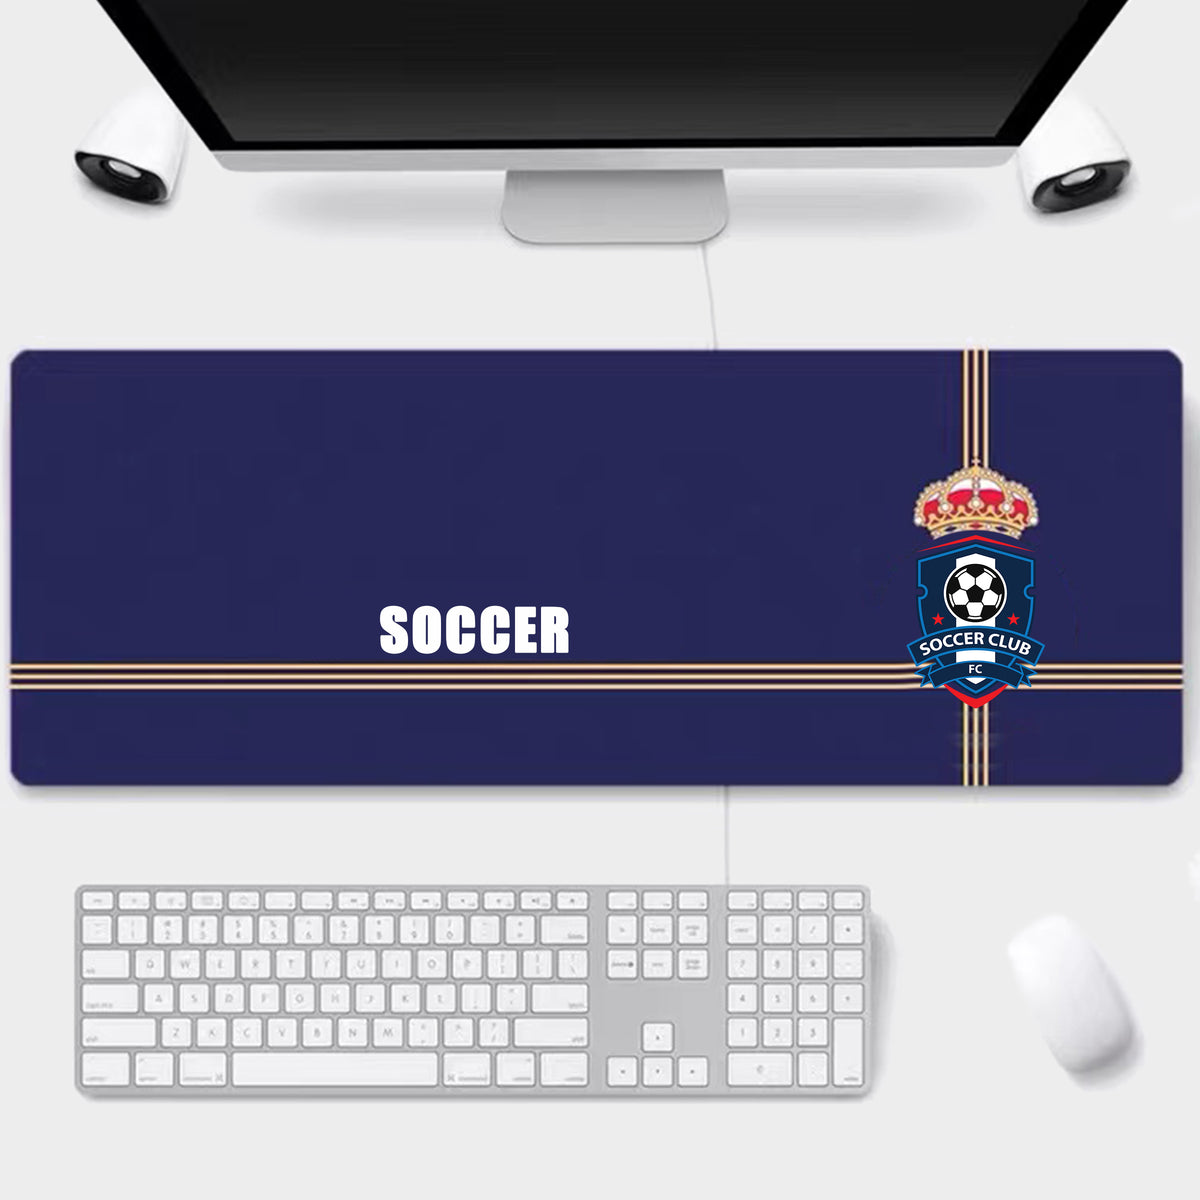 【Sport Club系列】滑鼠墊訂製 客製化滑鼠墊 球隊圖案訂製 訂製球隊logo